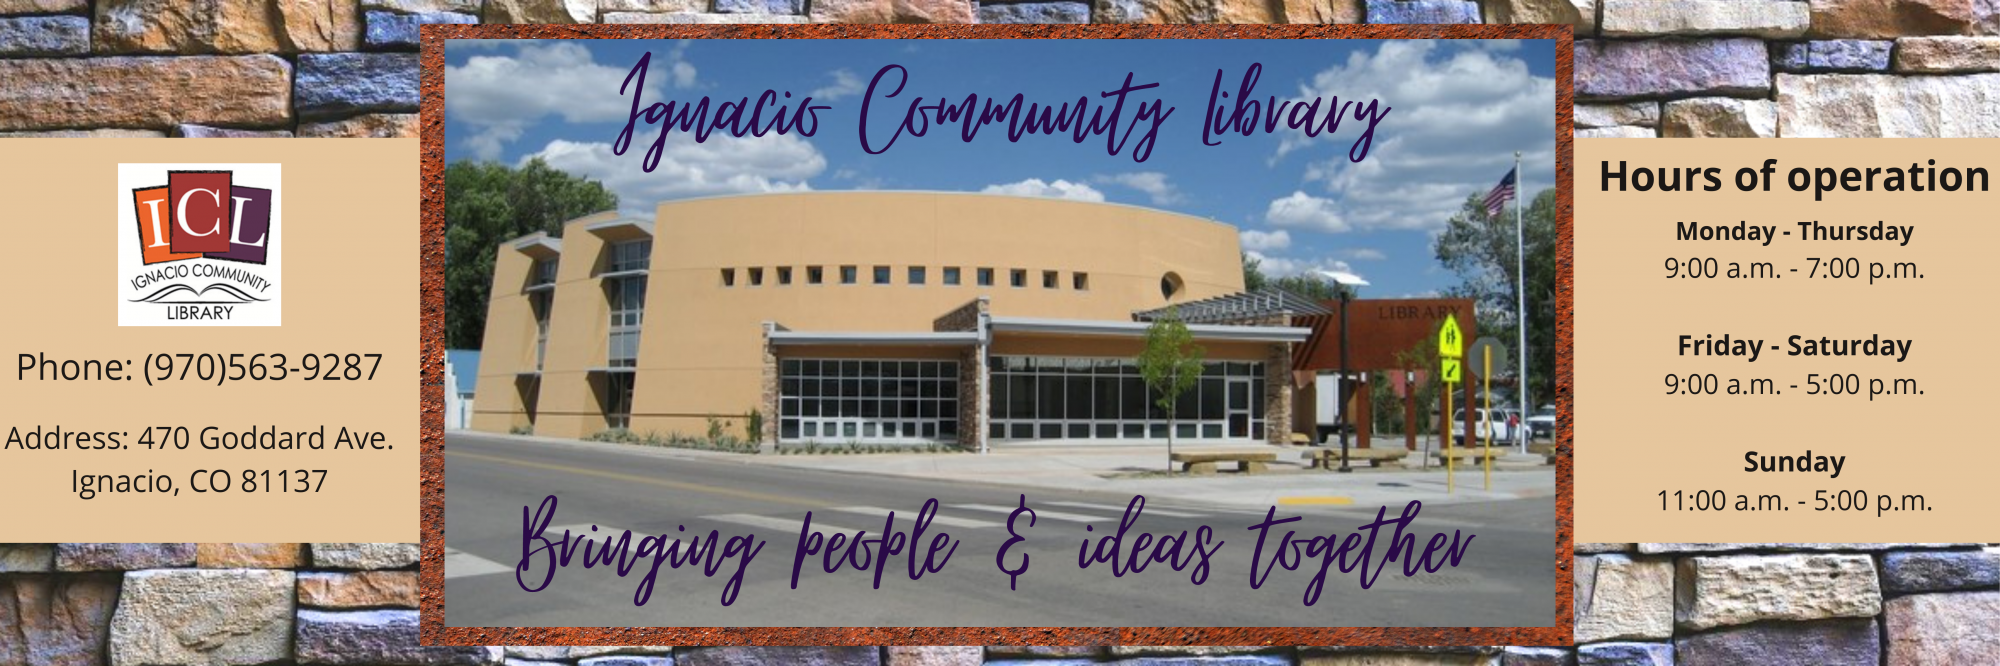 Ignacio Community Library